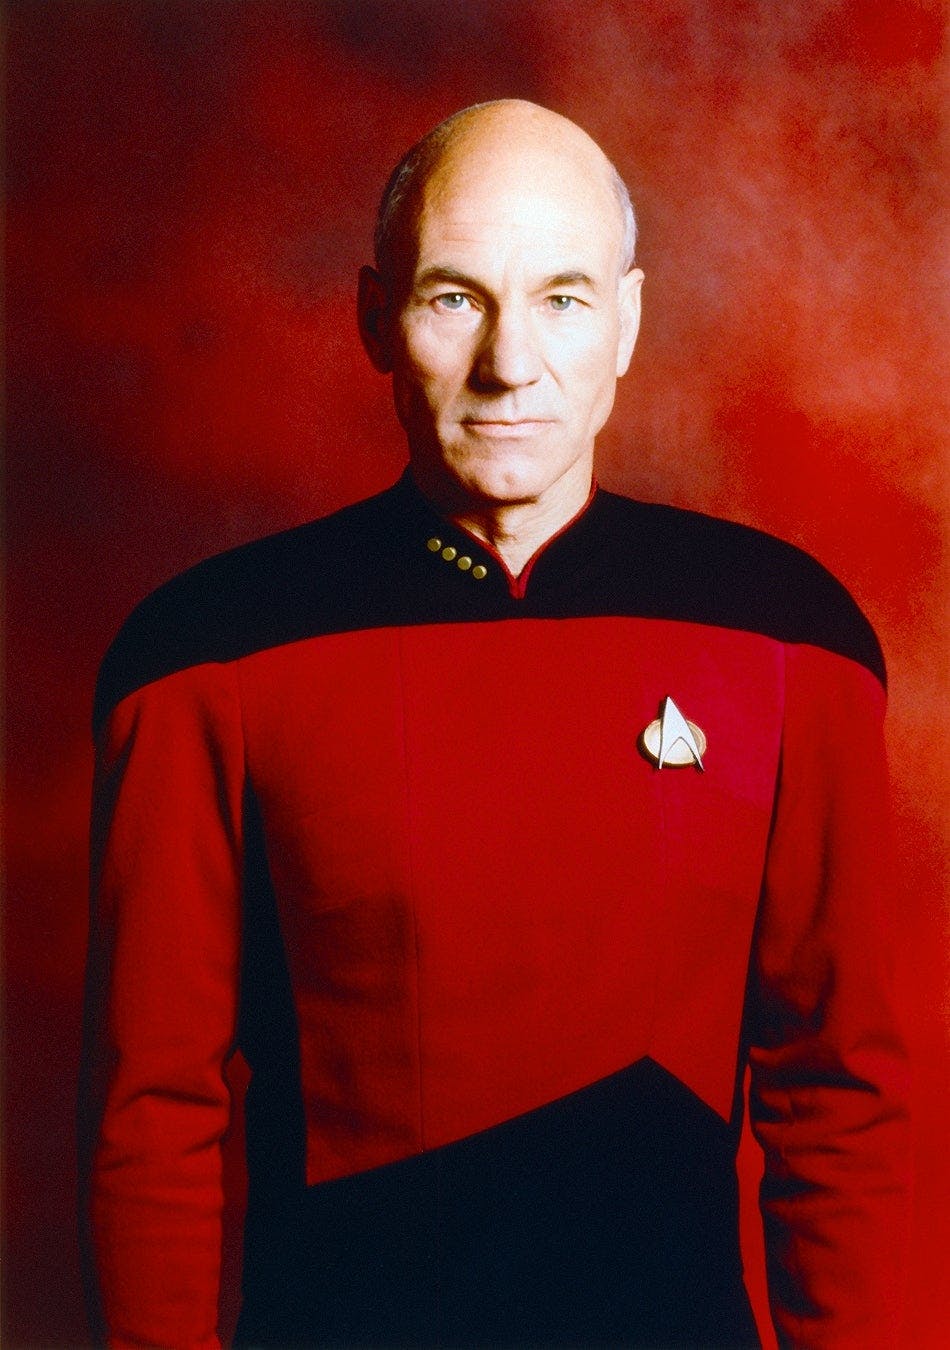 Sir Patrick Stewart poses as Captain Jean-Luc Picard for Star Trek: The Next Generation's Season 3 promotional cast portrait